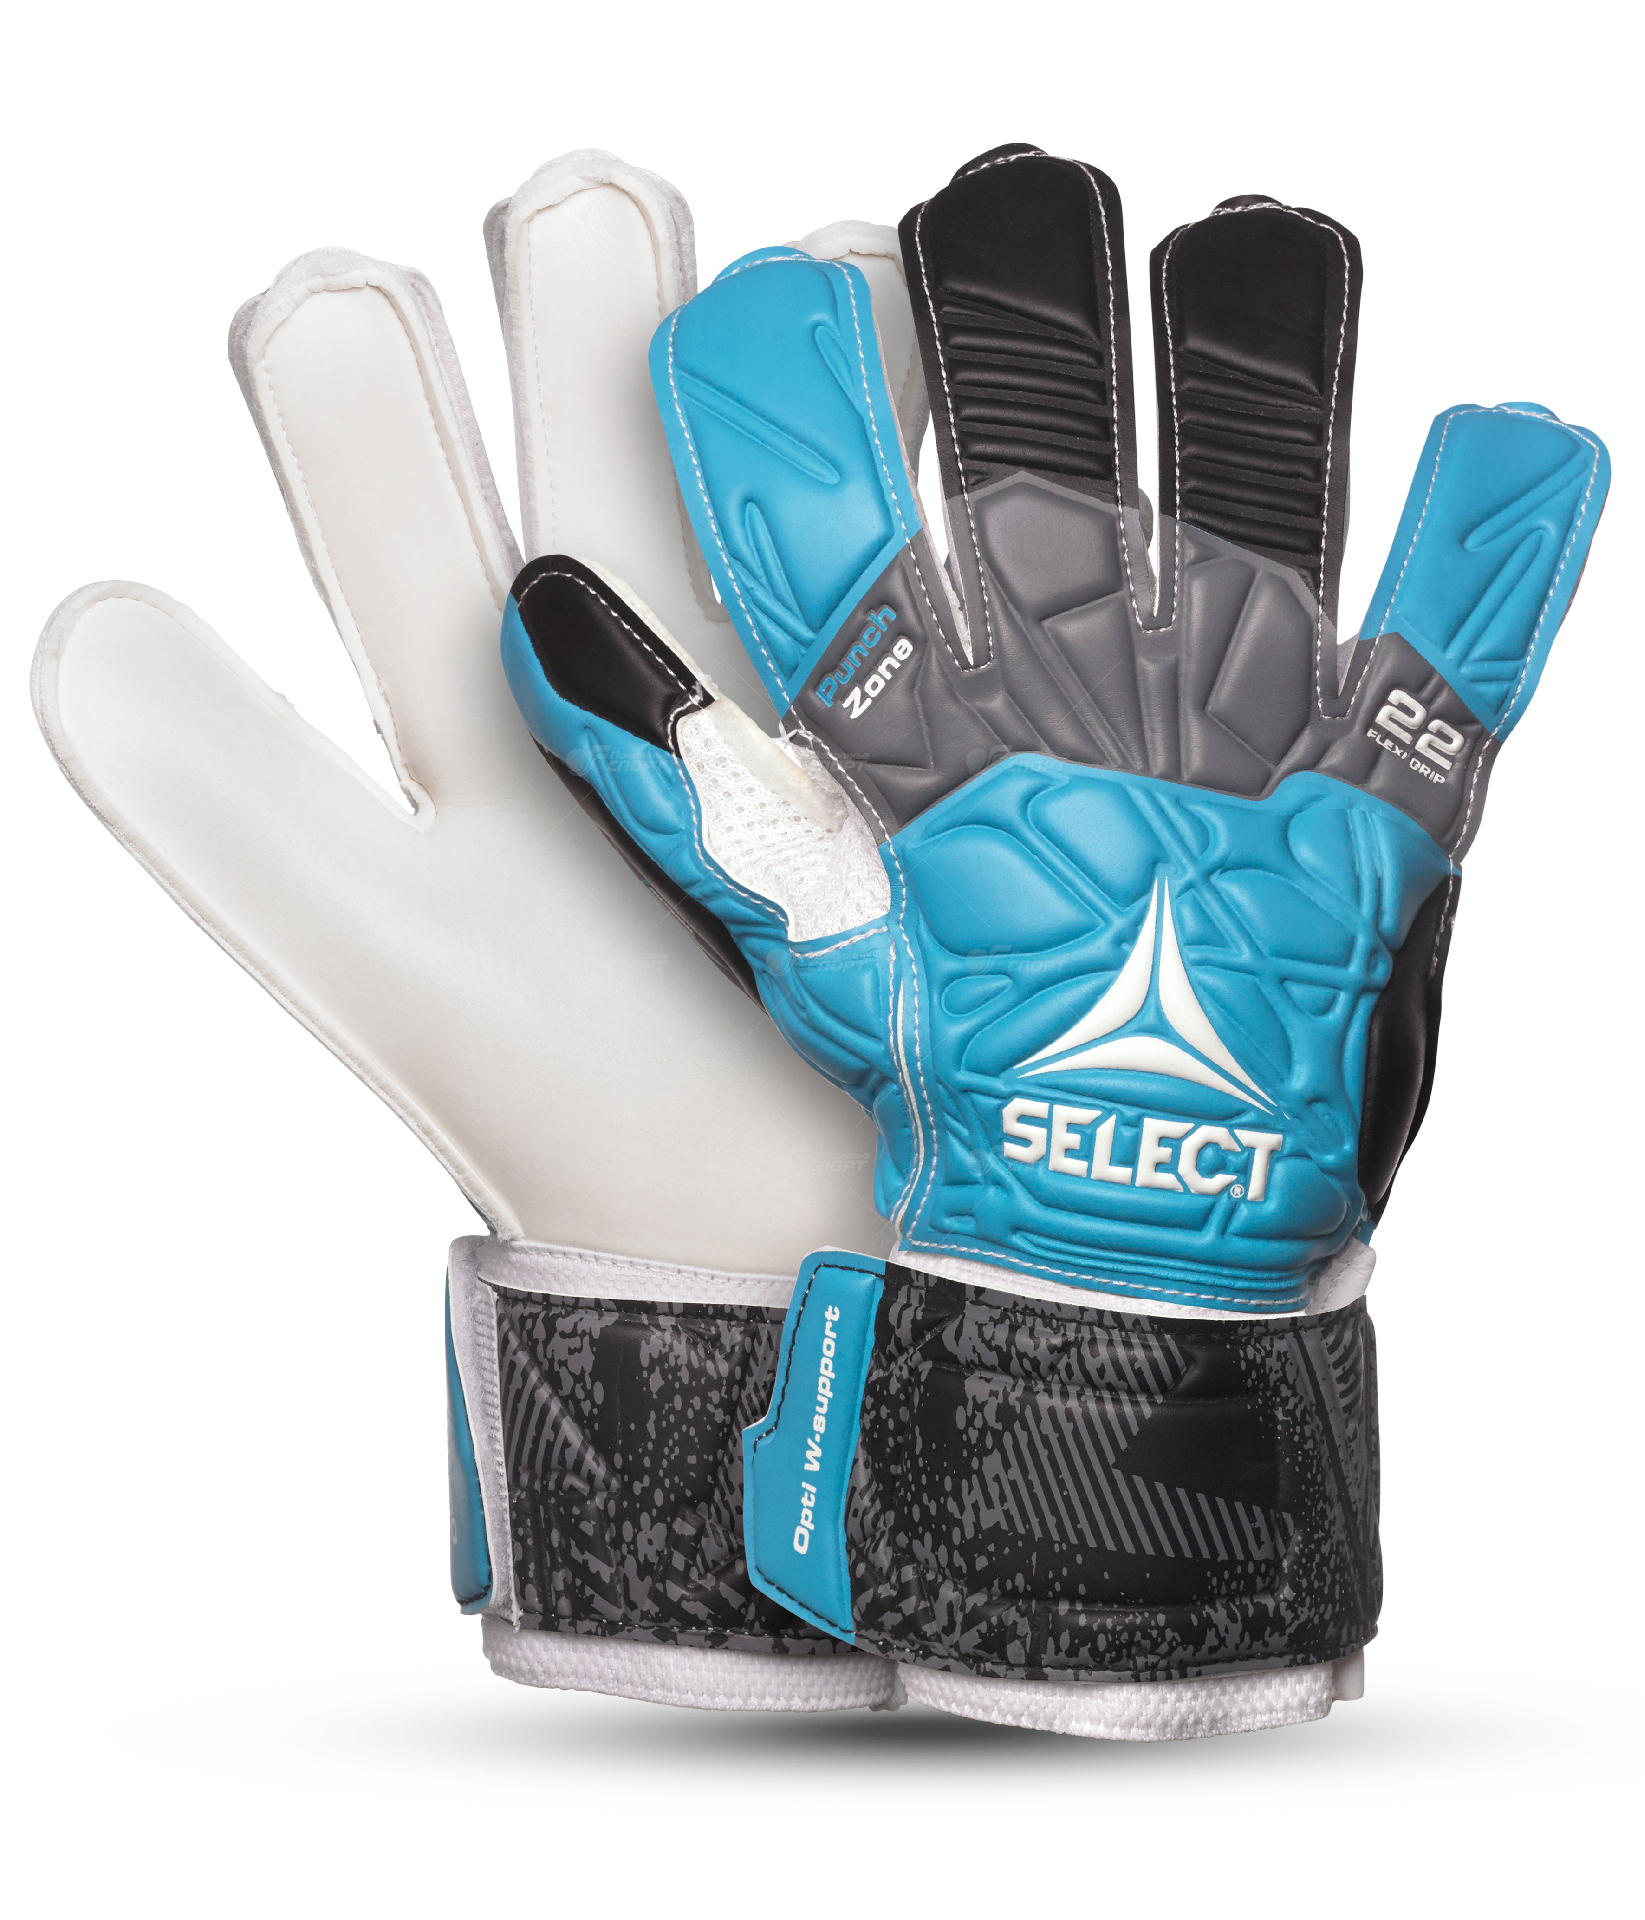 Перчатки вратарские Select 22 Flexi Grip арт.730120 р.8-11